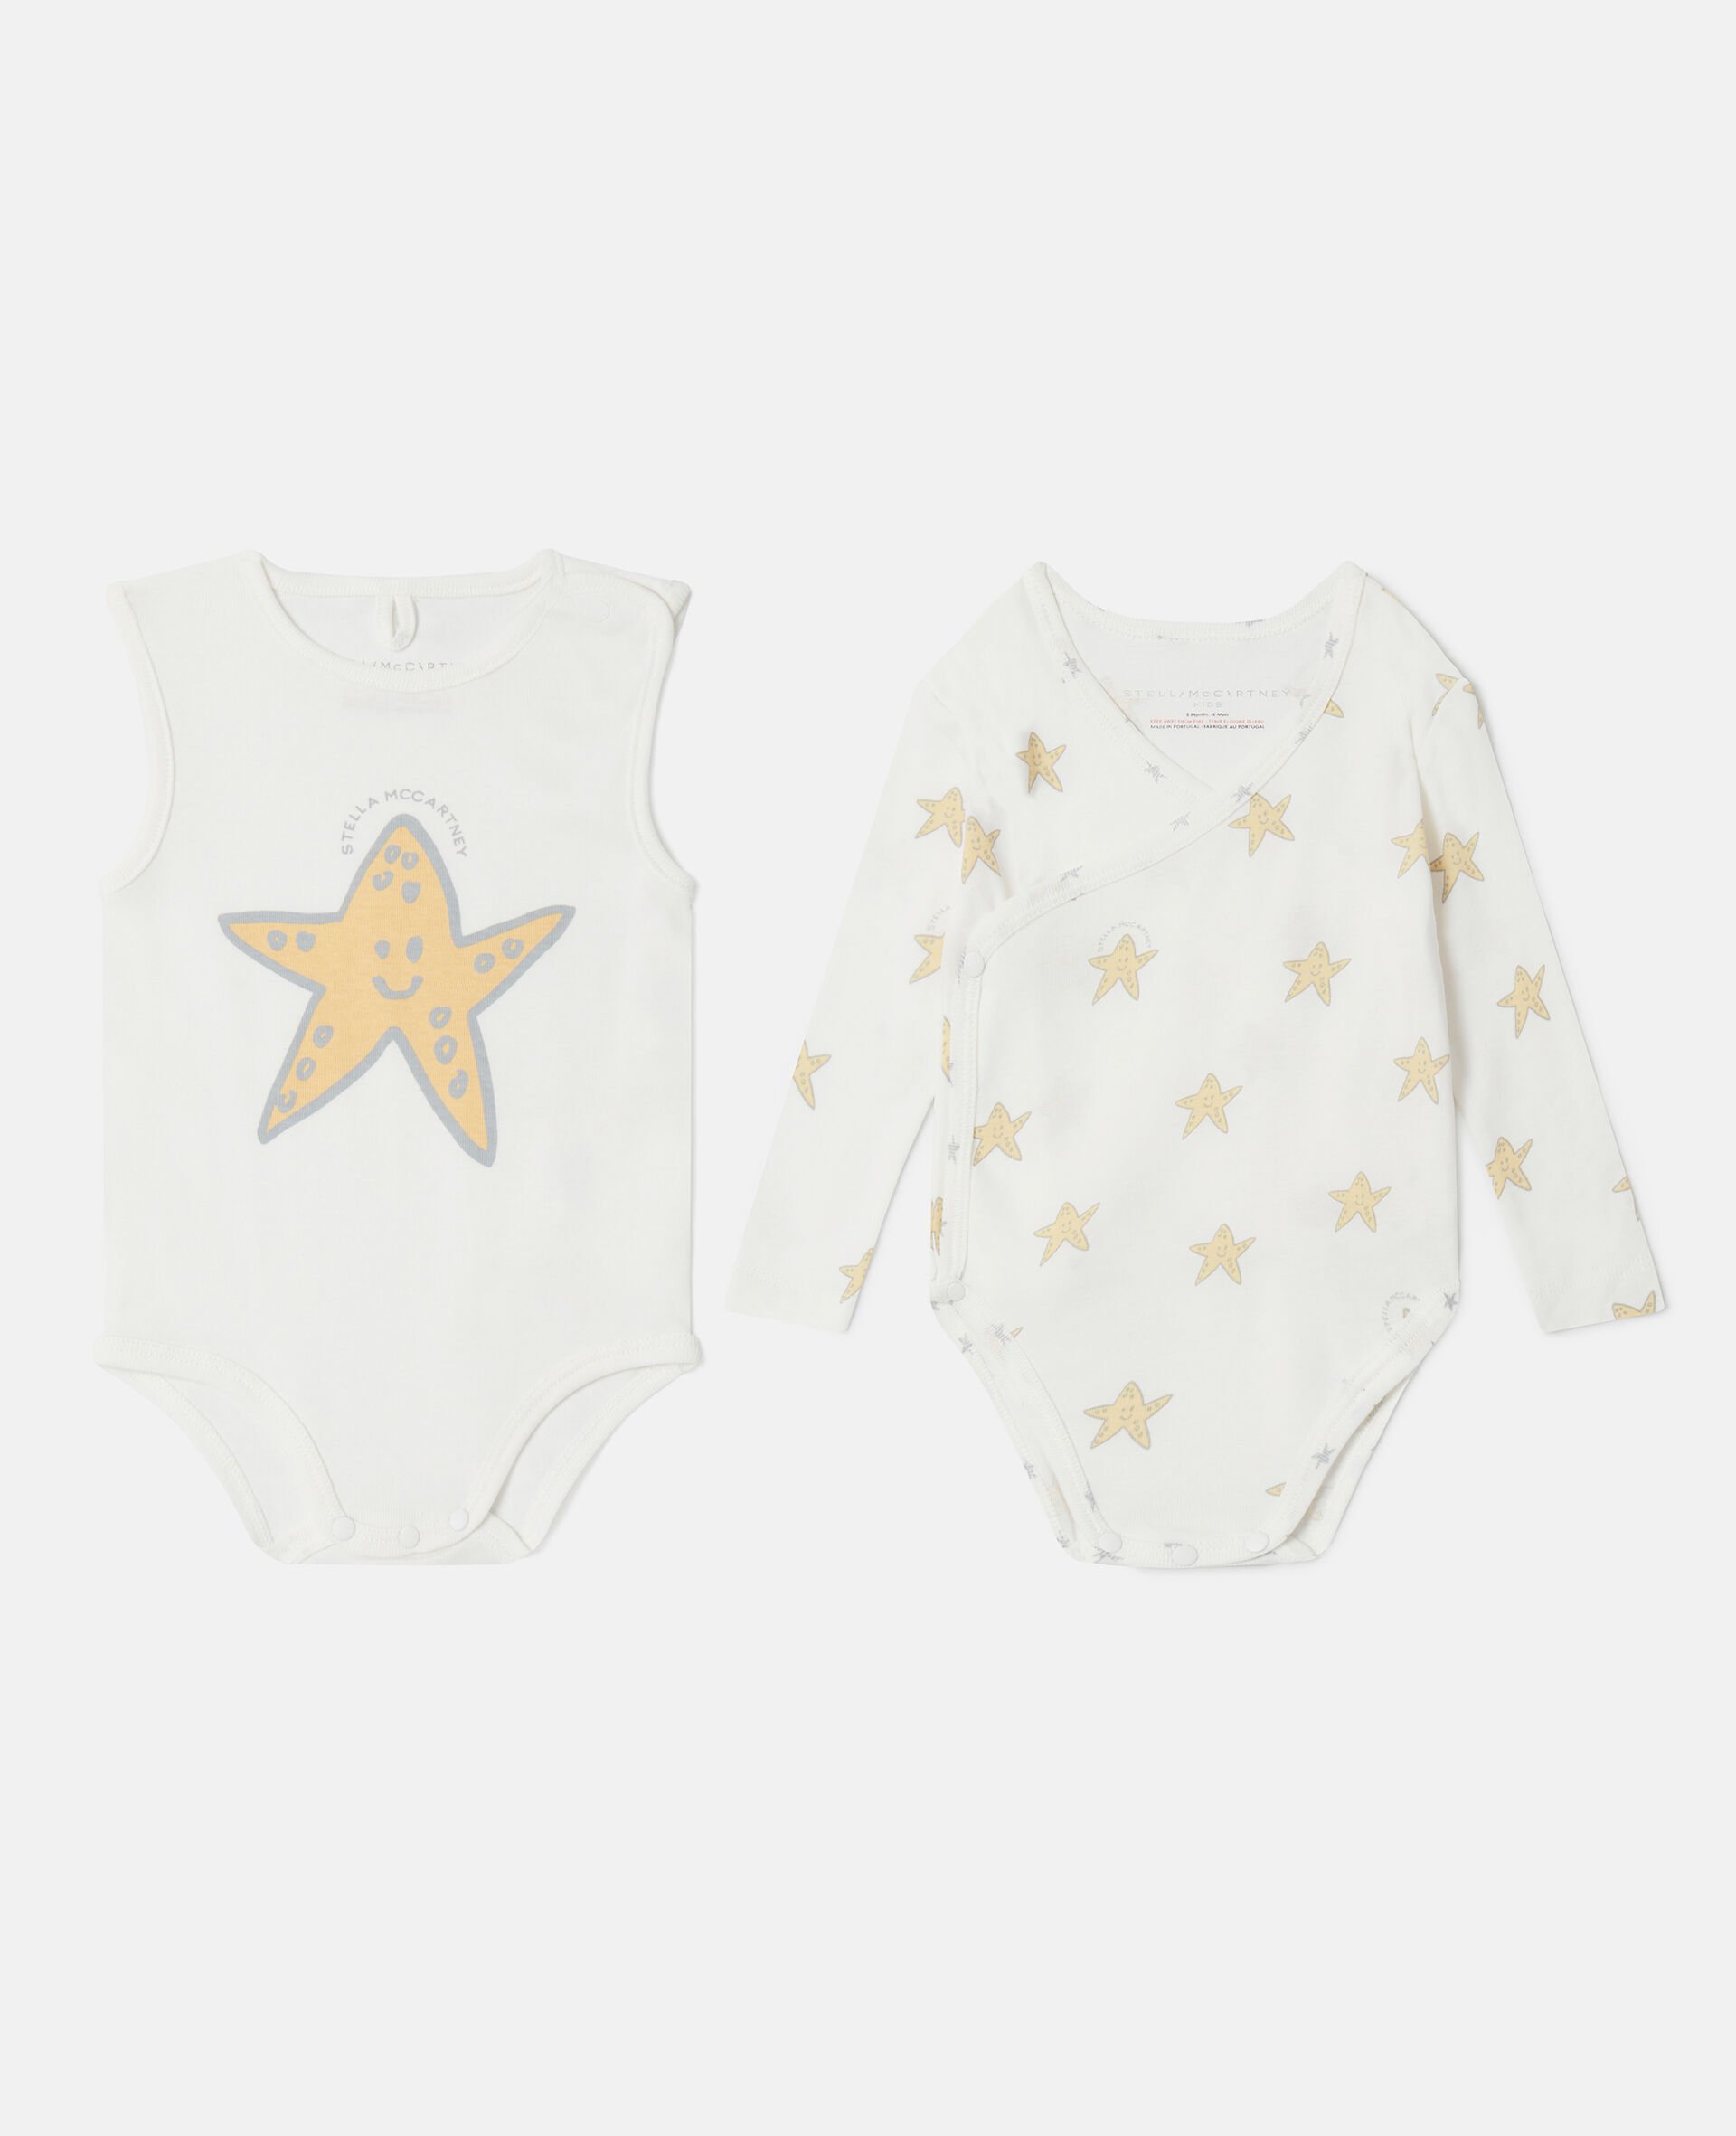 Smiling Stella Star Print Bodysuit and Sleepsuit Set-Fantaisie-large image number 0